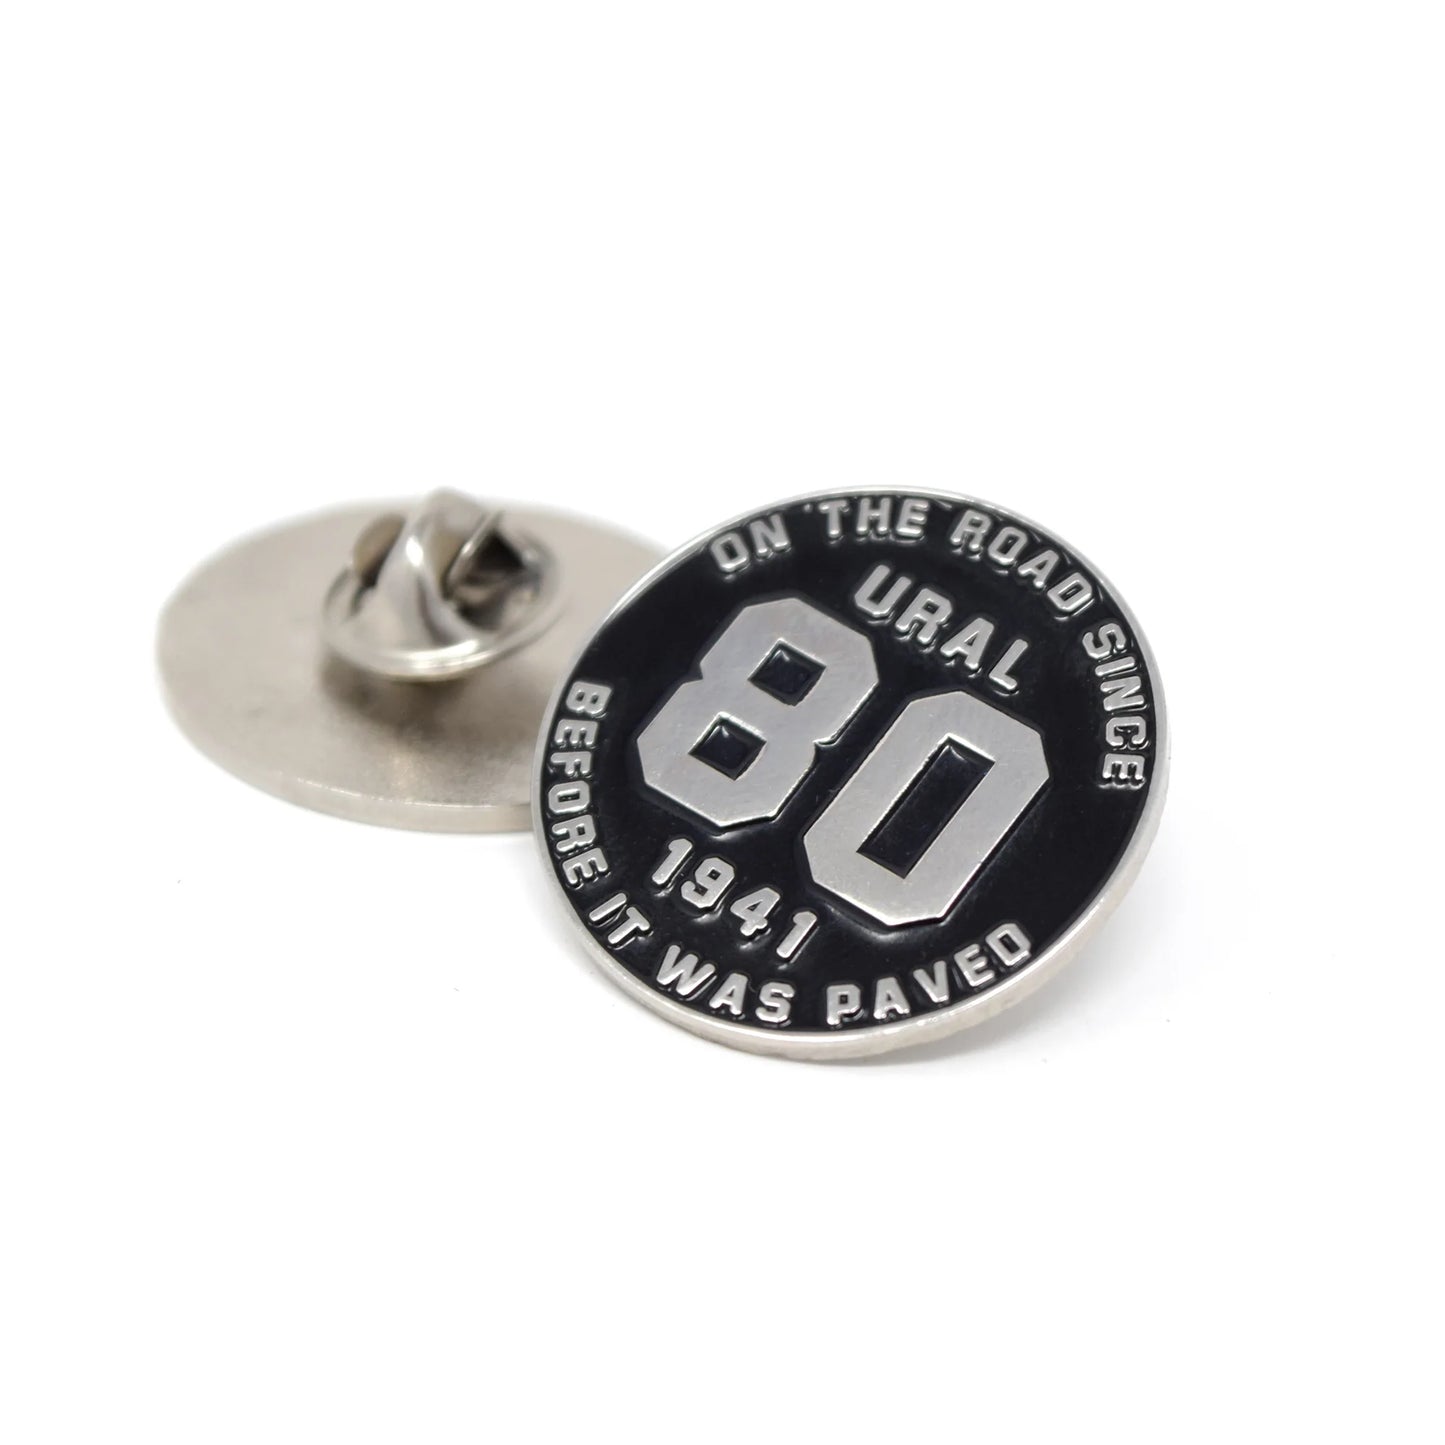 80th Anniversary Pin